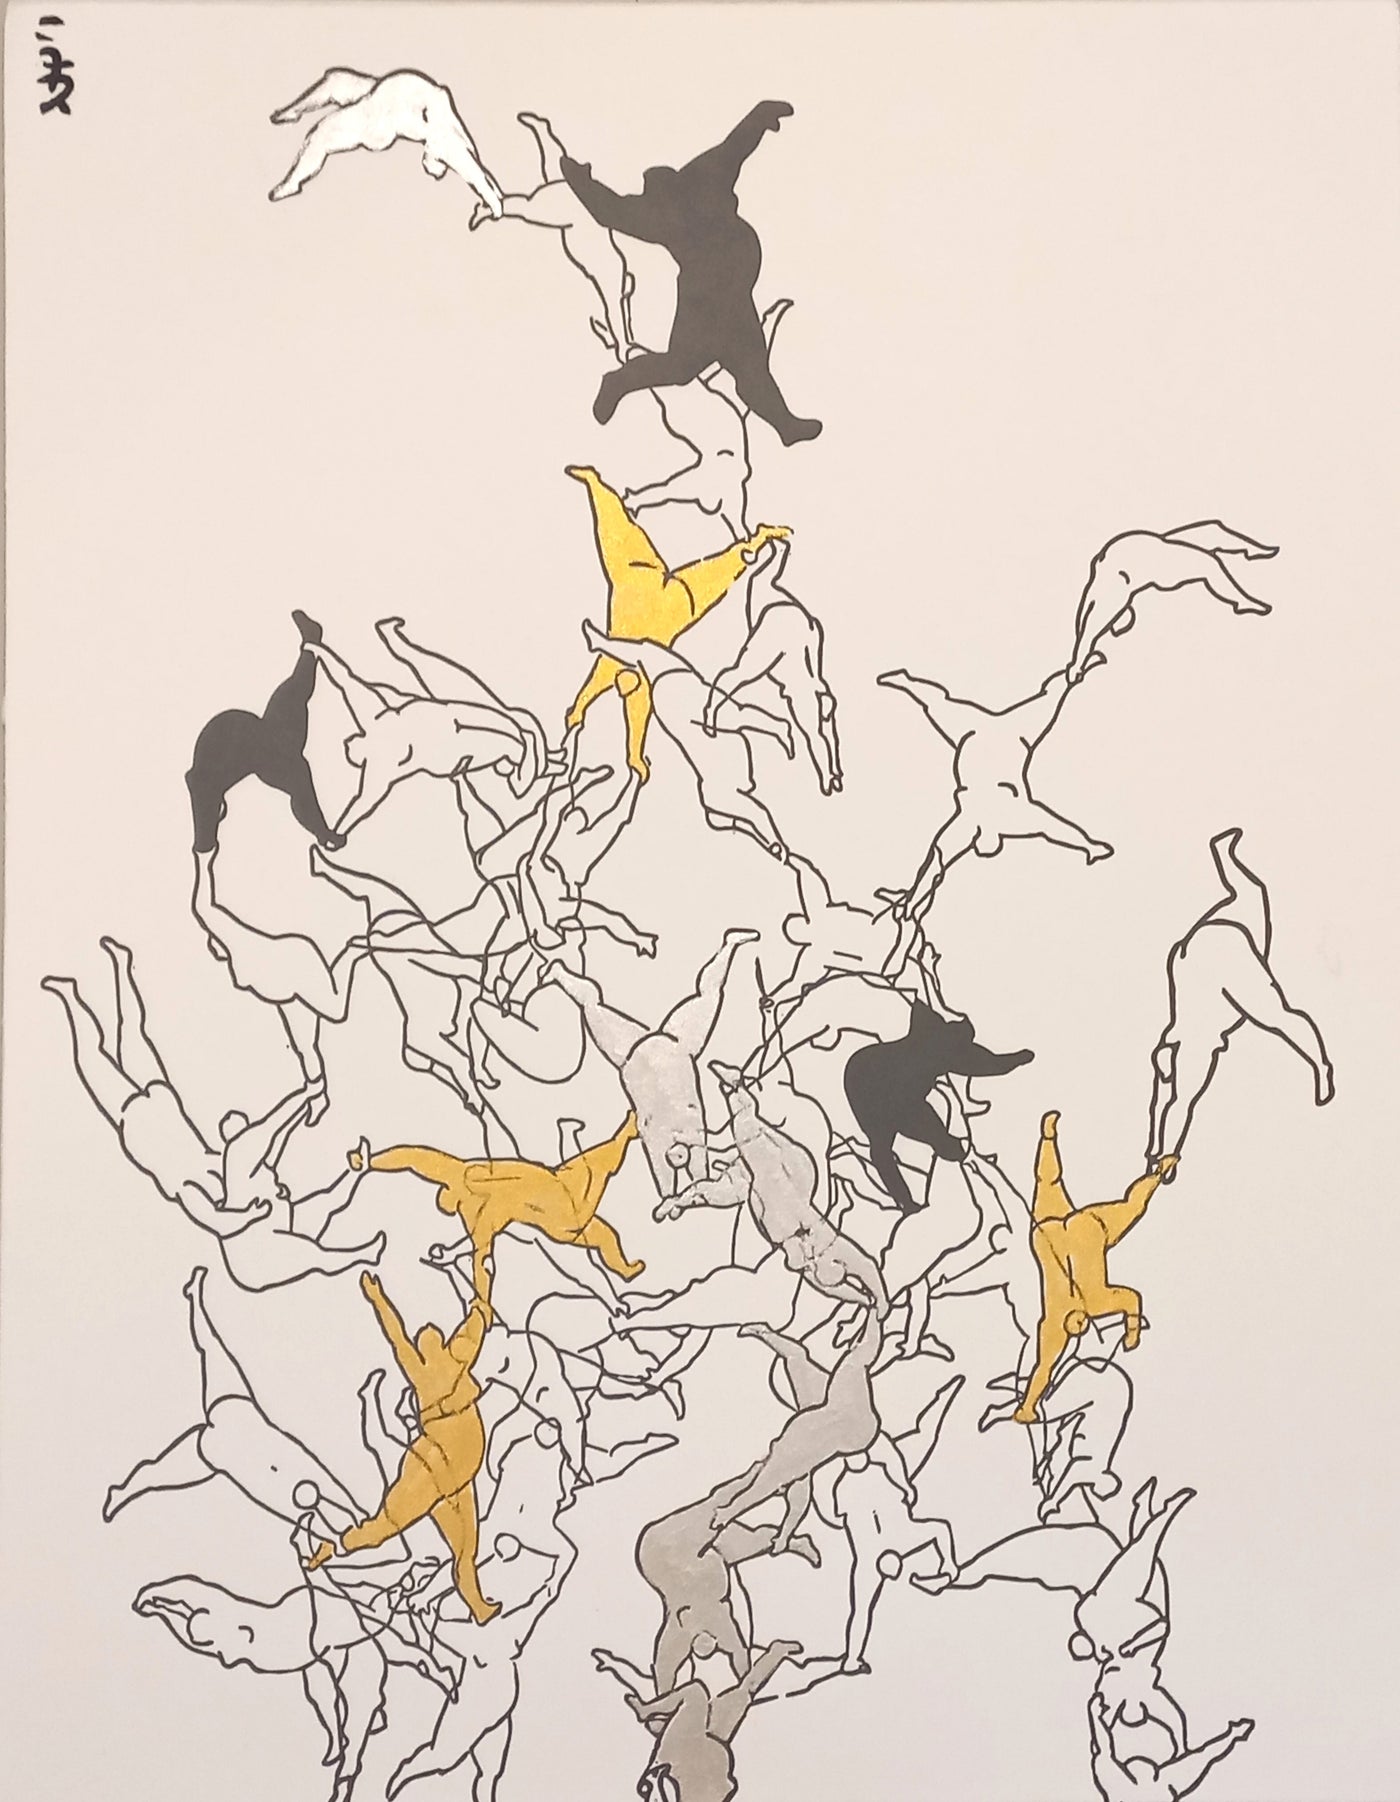 Chained Figures Print by Tomoko Suzuki